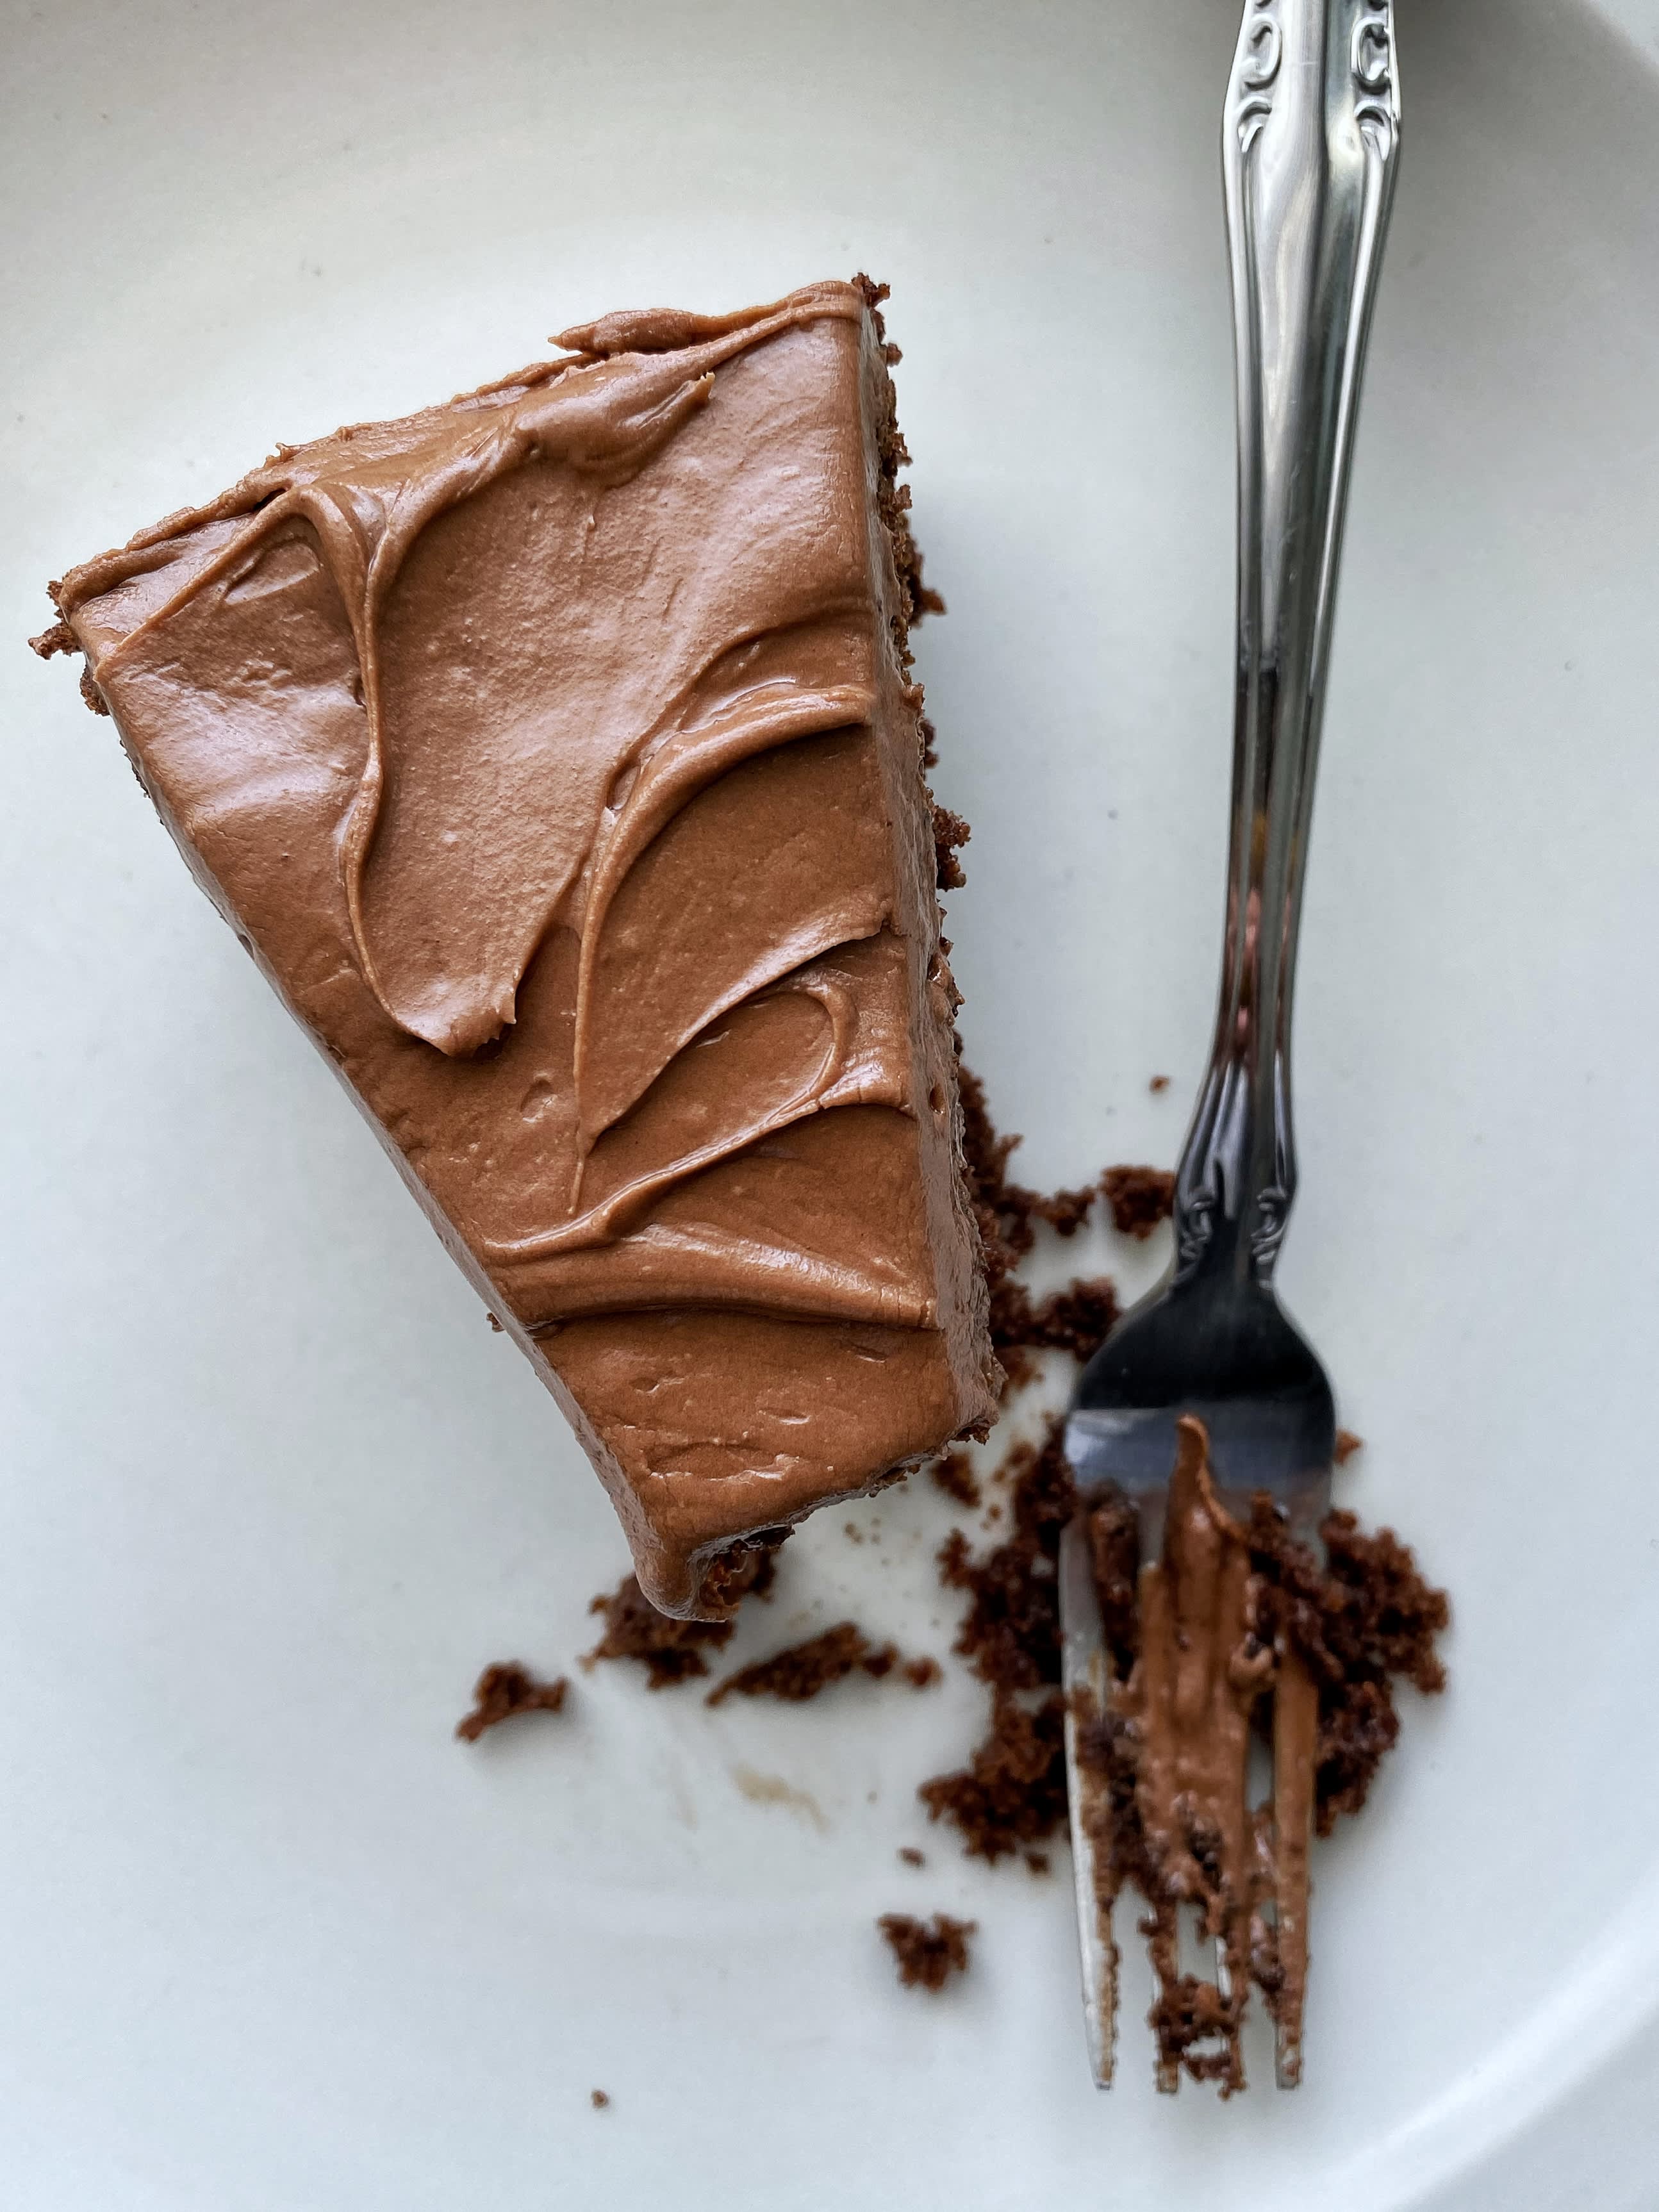 Vegan Midnight Chocolate Cake | 6 inch | Just Desserts | Good Eggs